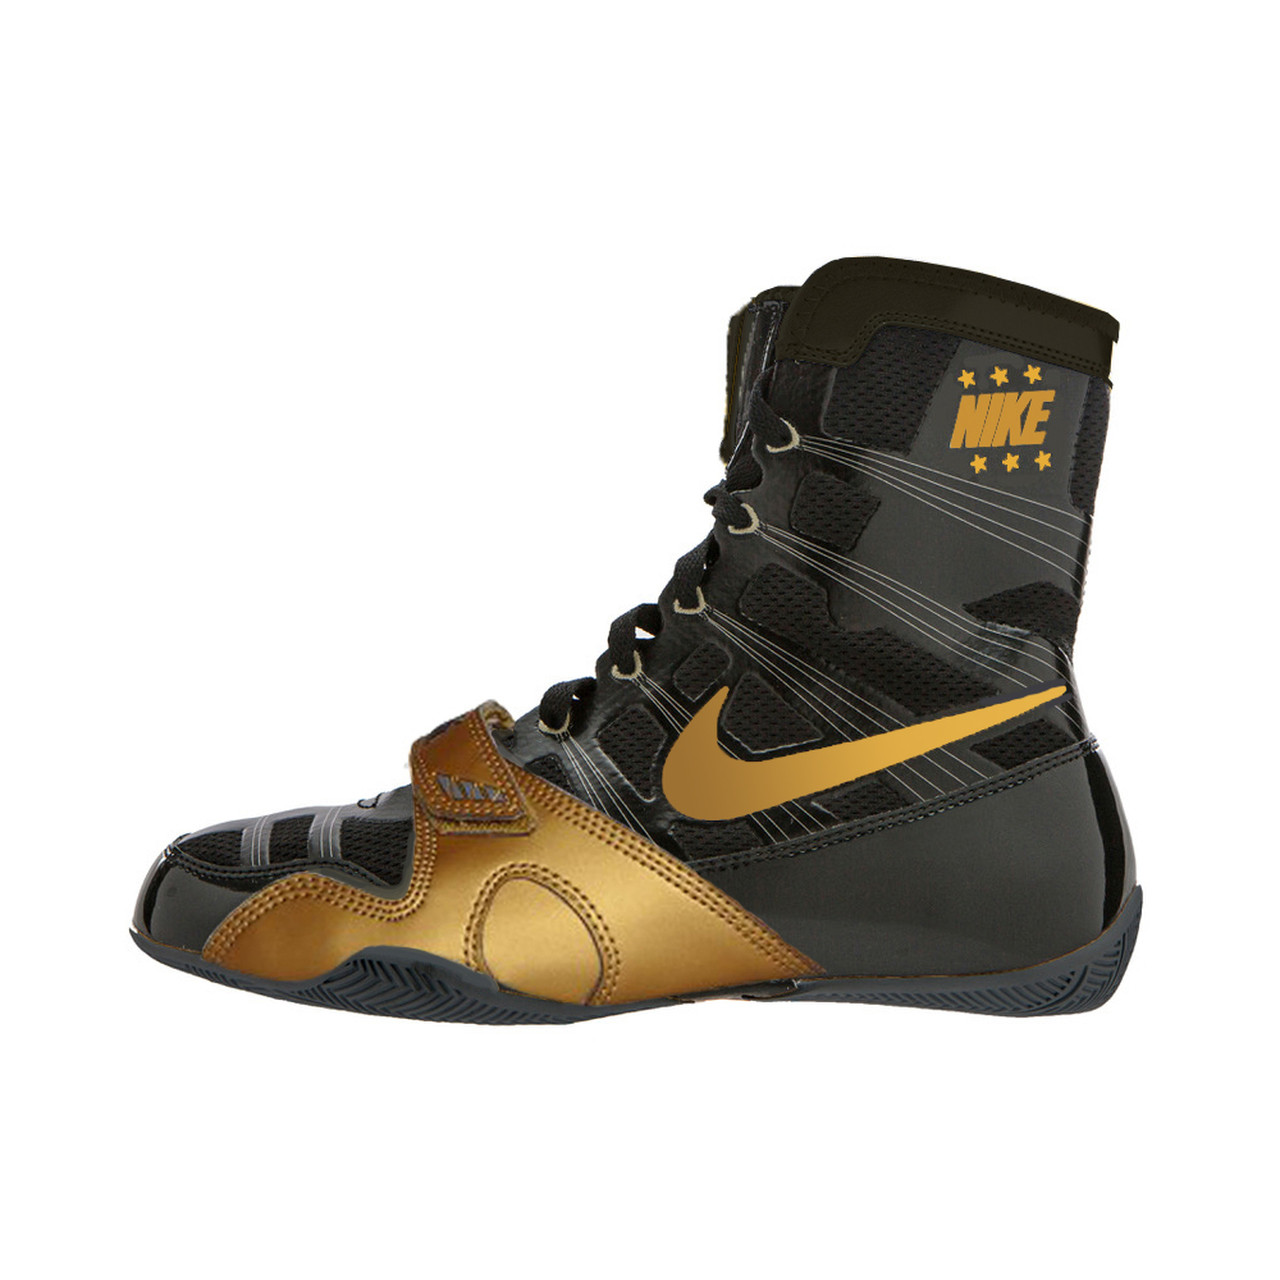 Black And Gold Nike Boxing Boots Denmark, SAVE 57% - nereus-worldwide.com